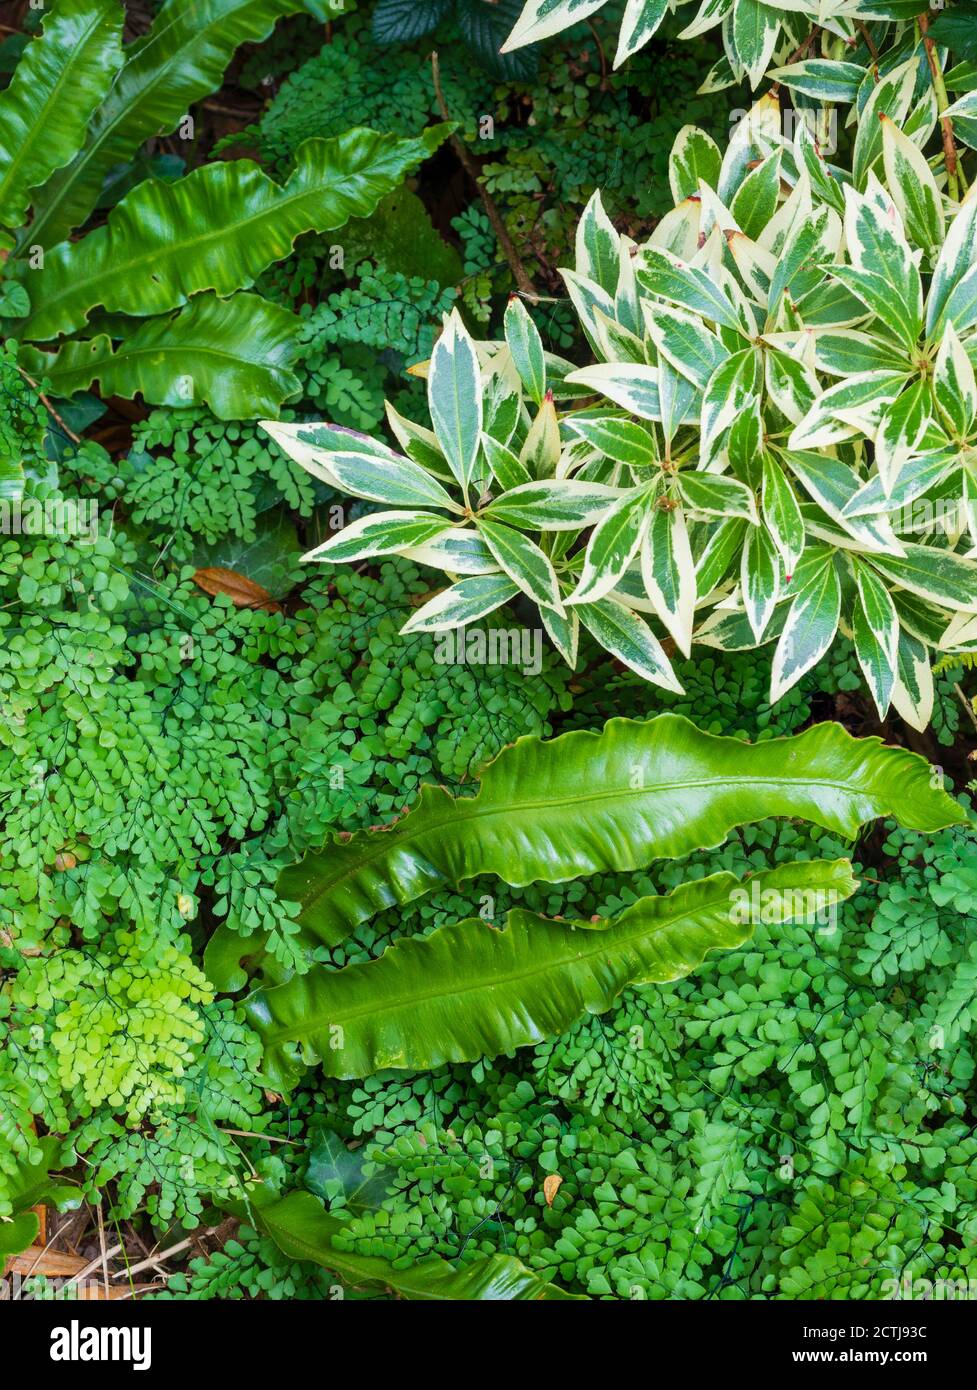 Hardy evergreen shade garden foliage combination with Asplenium scolopendrium and Adiantum venustum growing under variegated Pieris japonica 'Flaming Stock Photo